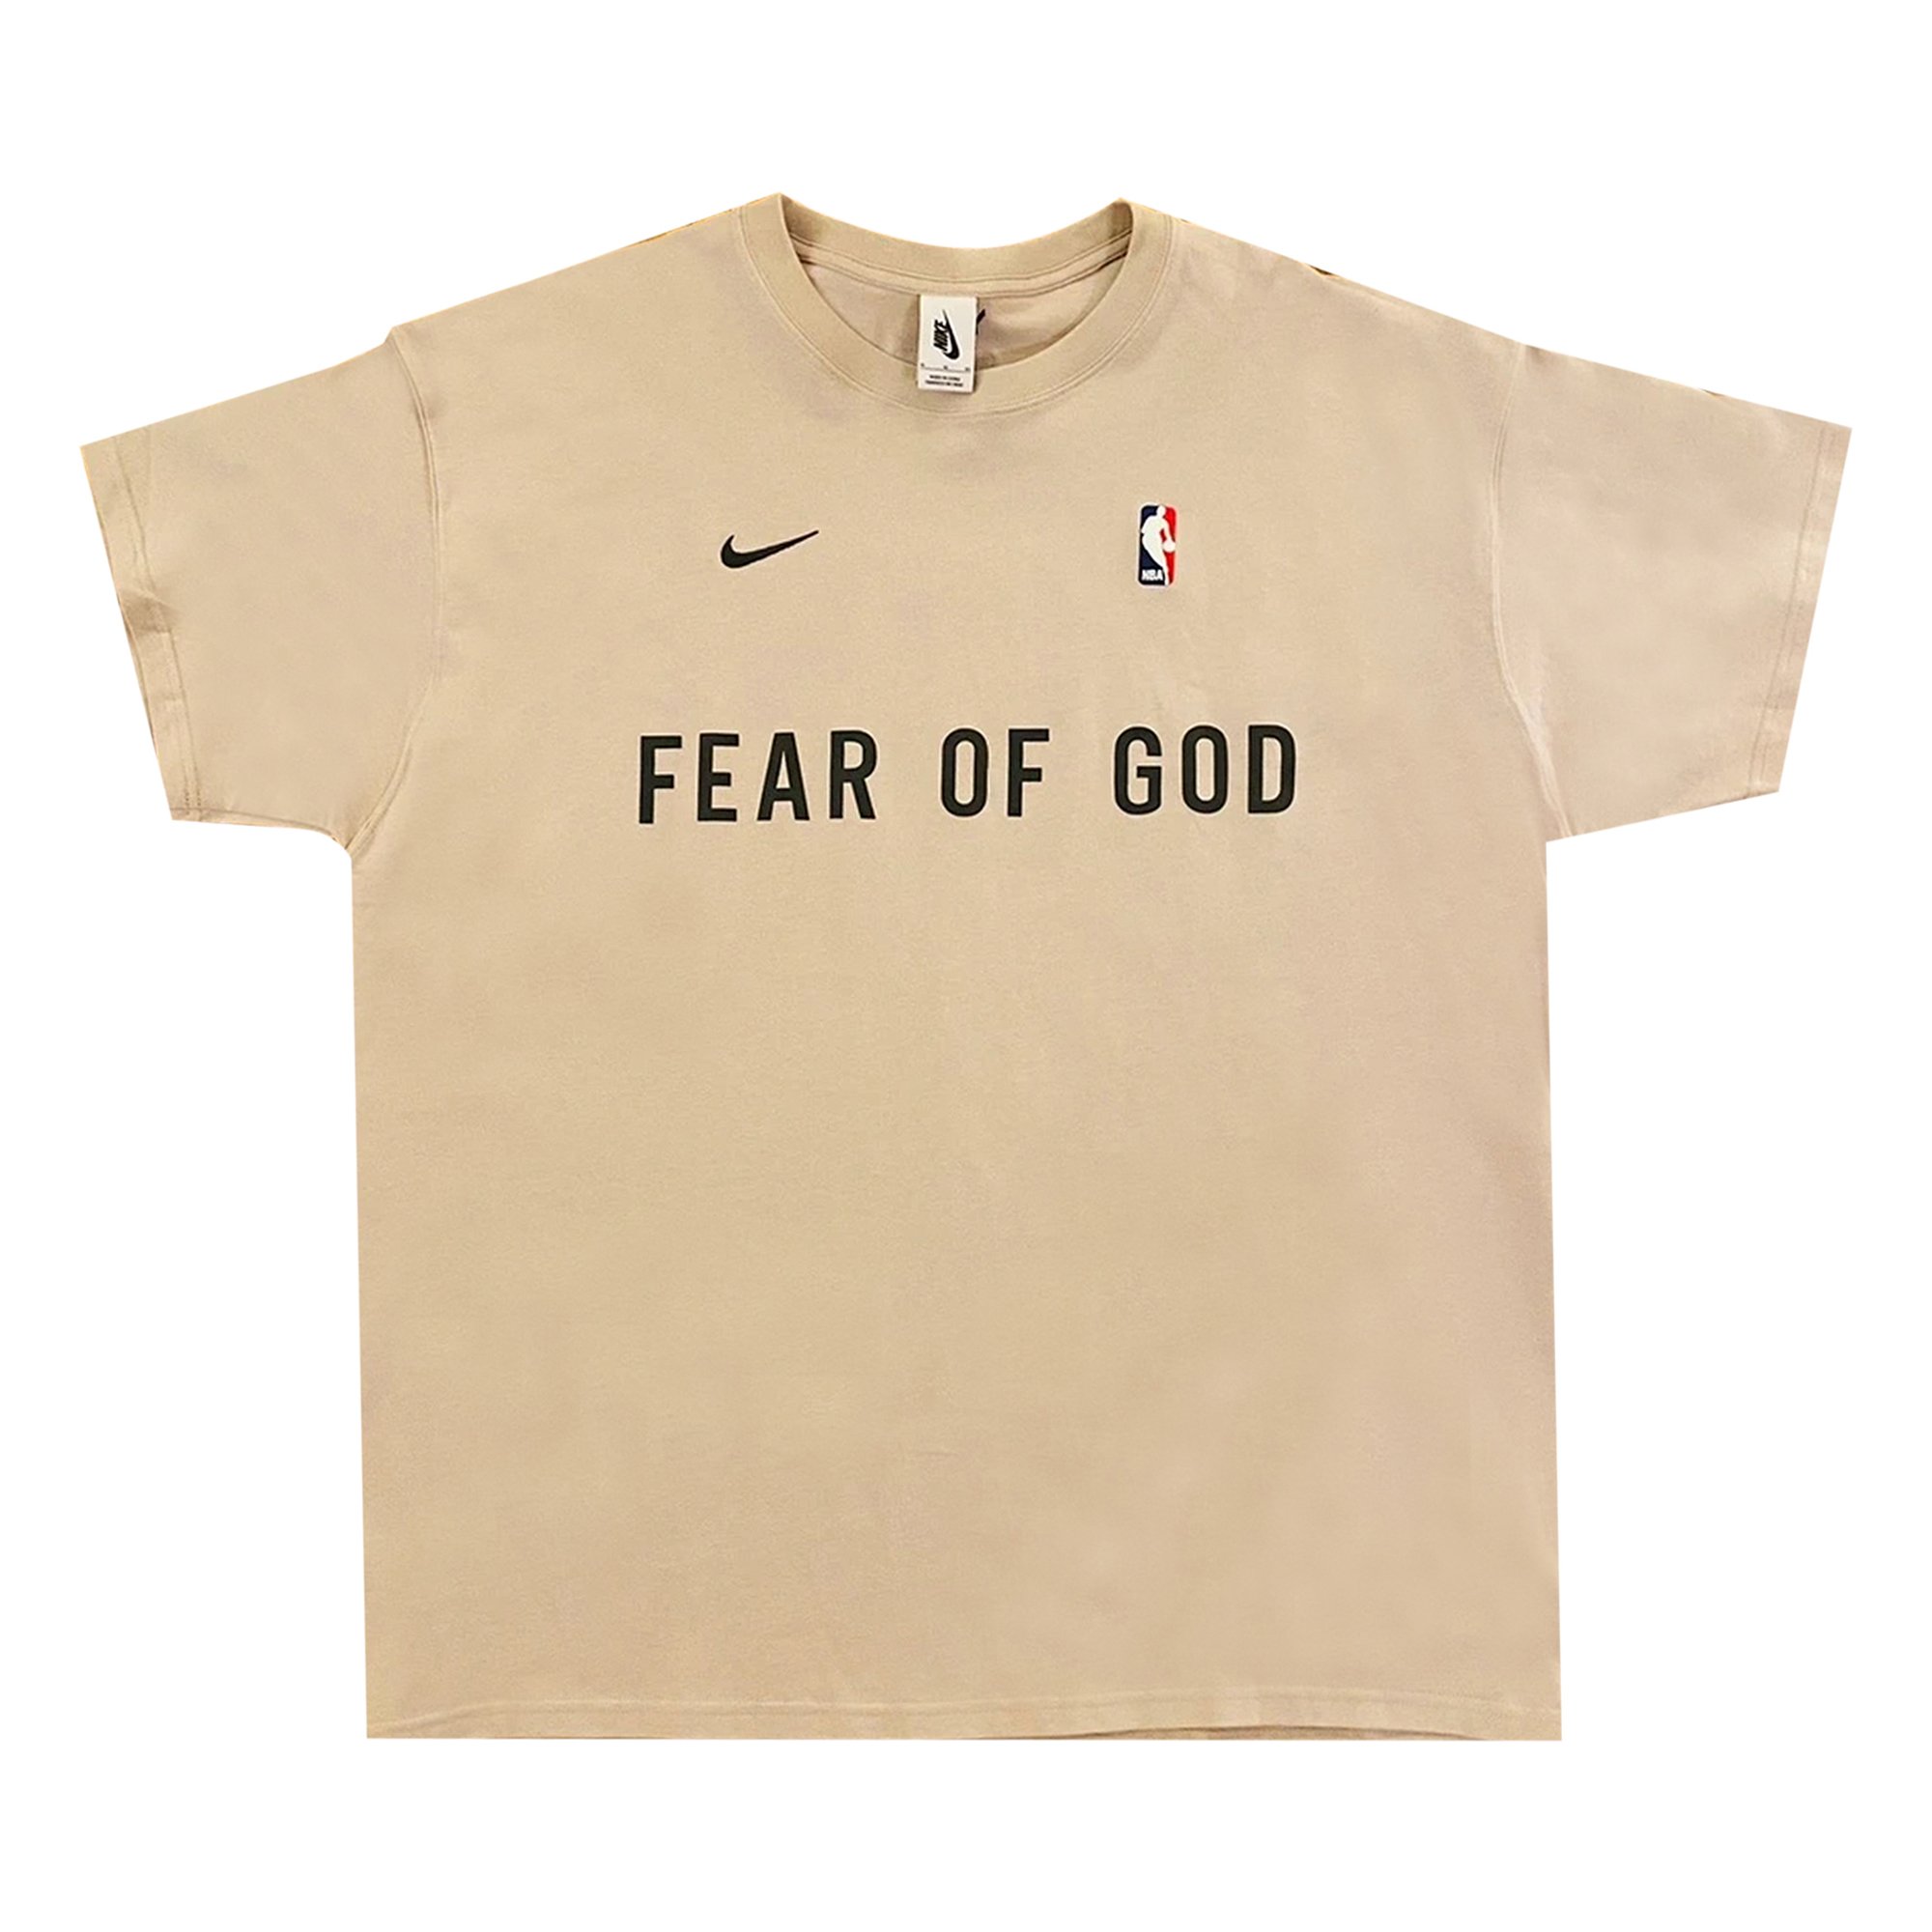 FEAR OF GOD × Nike Warm Up T-Shirt